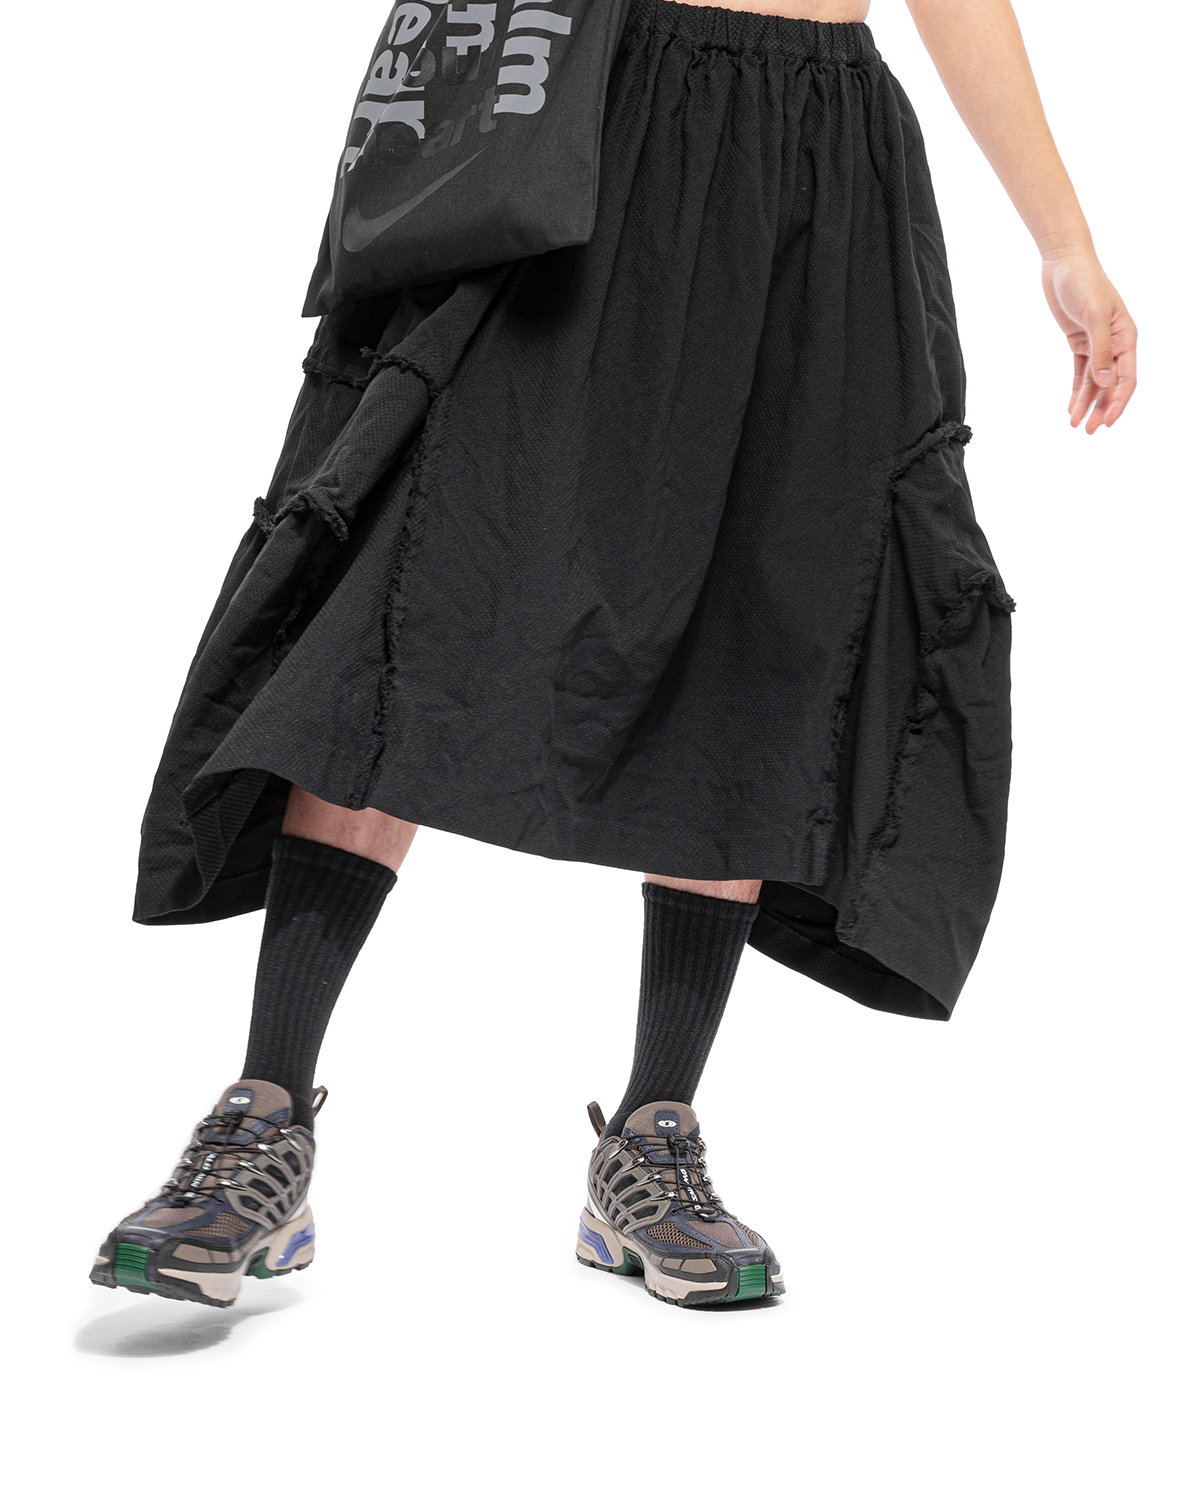 CDG Parachute Skirt Black